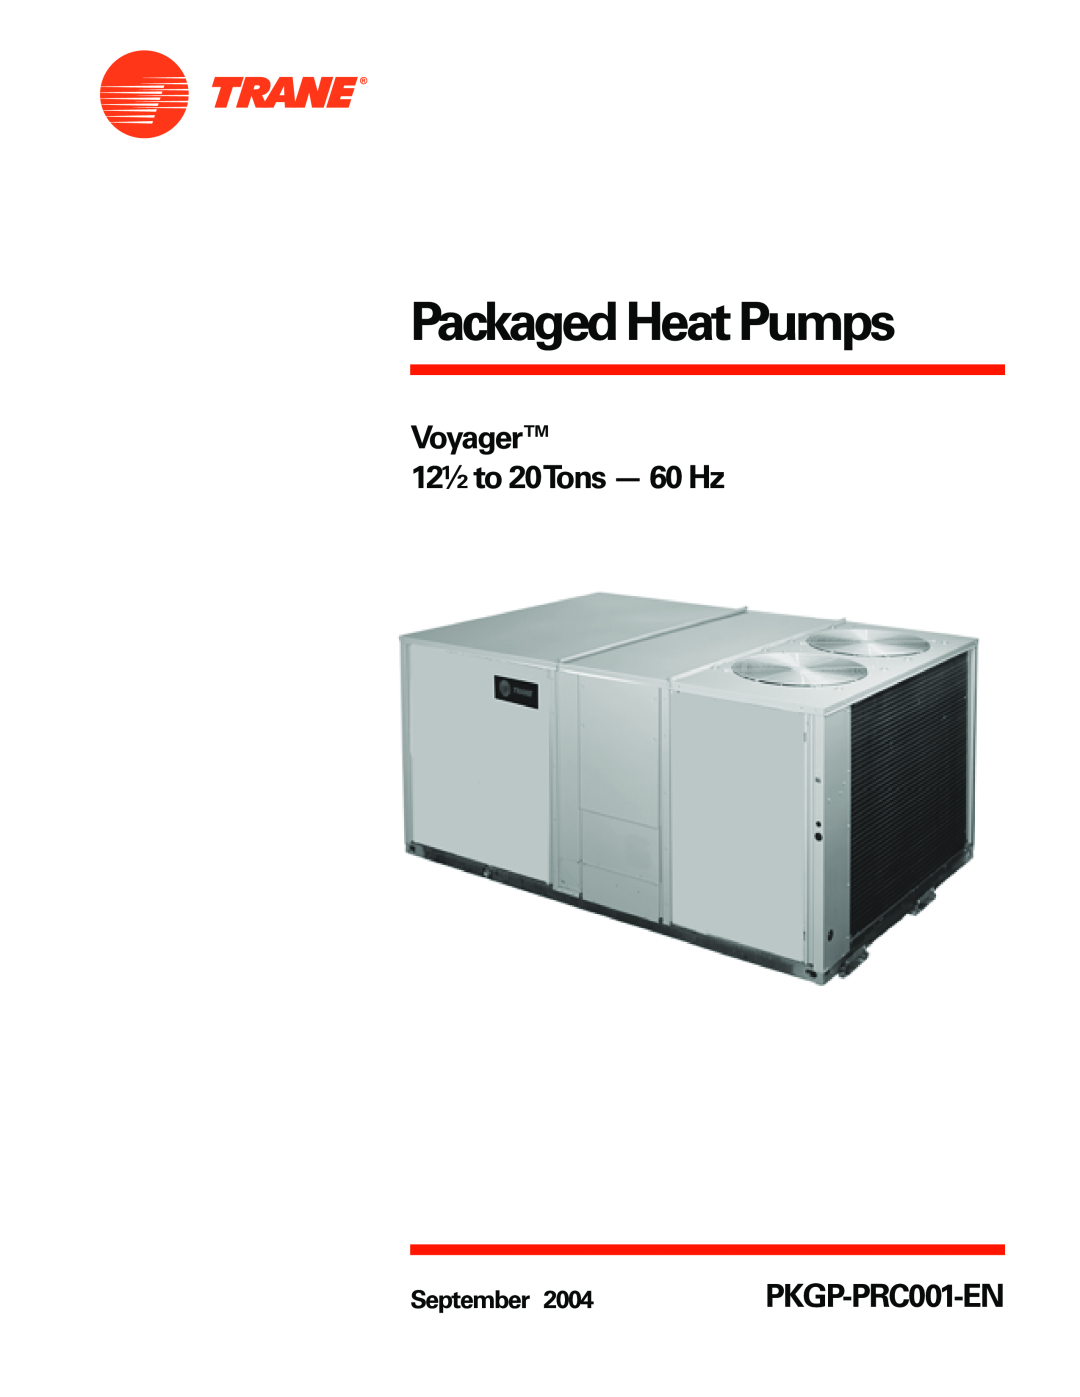 Trane PKGP-PRC001-EN manual Packaged Heat Pumps, Voyager 12½ to 20Tons - 60 Hz, September 